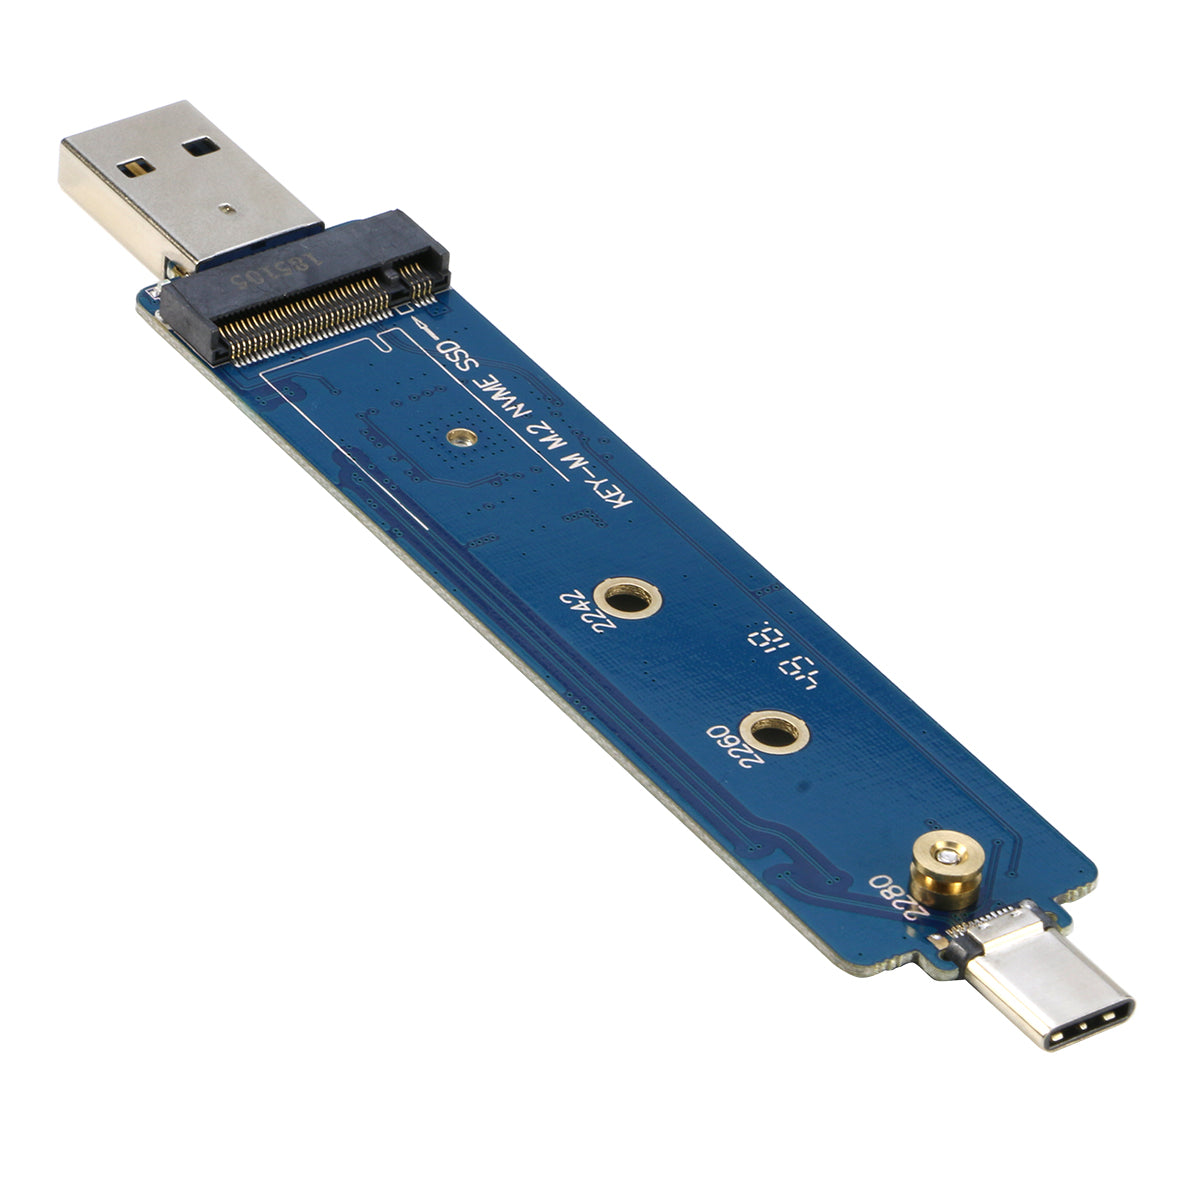 Strædet thong bestikke Plys dukke RIITOP NVMe USB Adapter PCIe M.2 NVME SSD to USB 3.1 Gen2 Type A and T